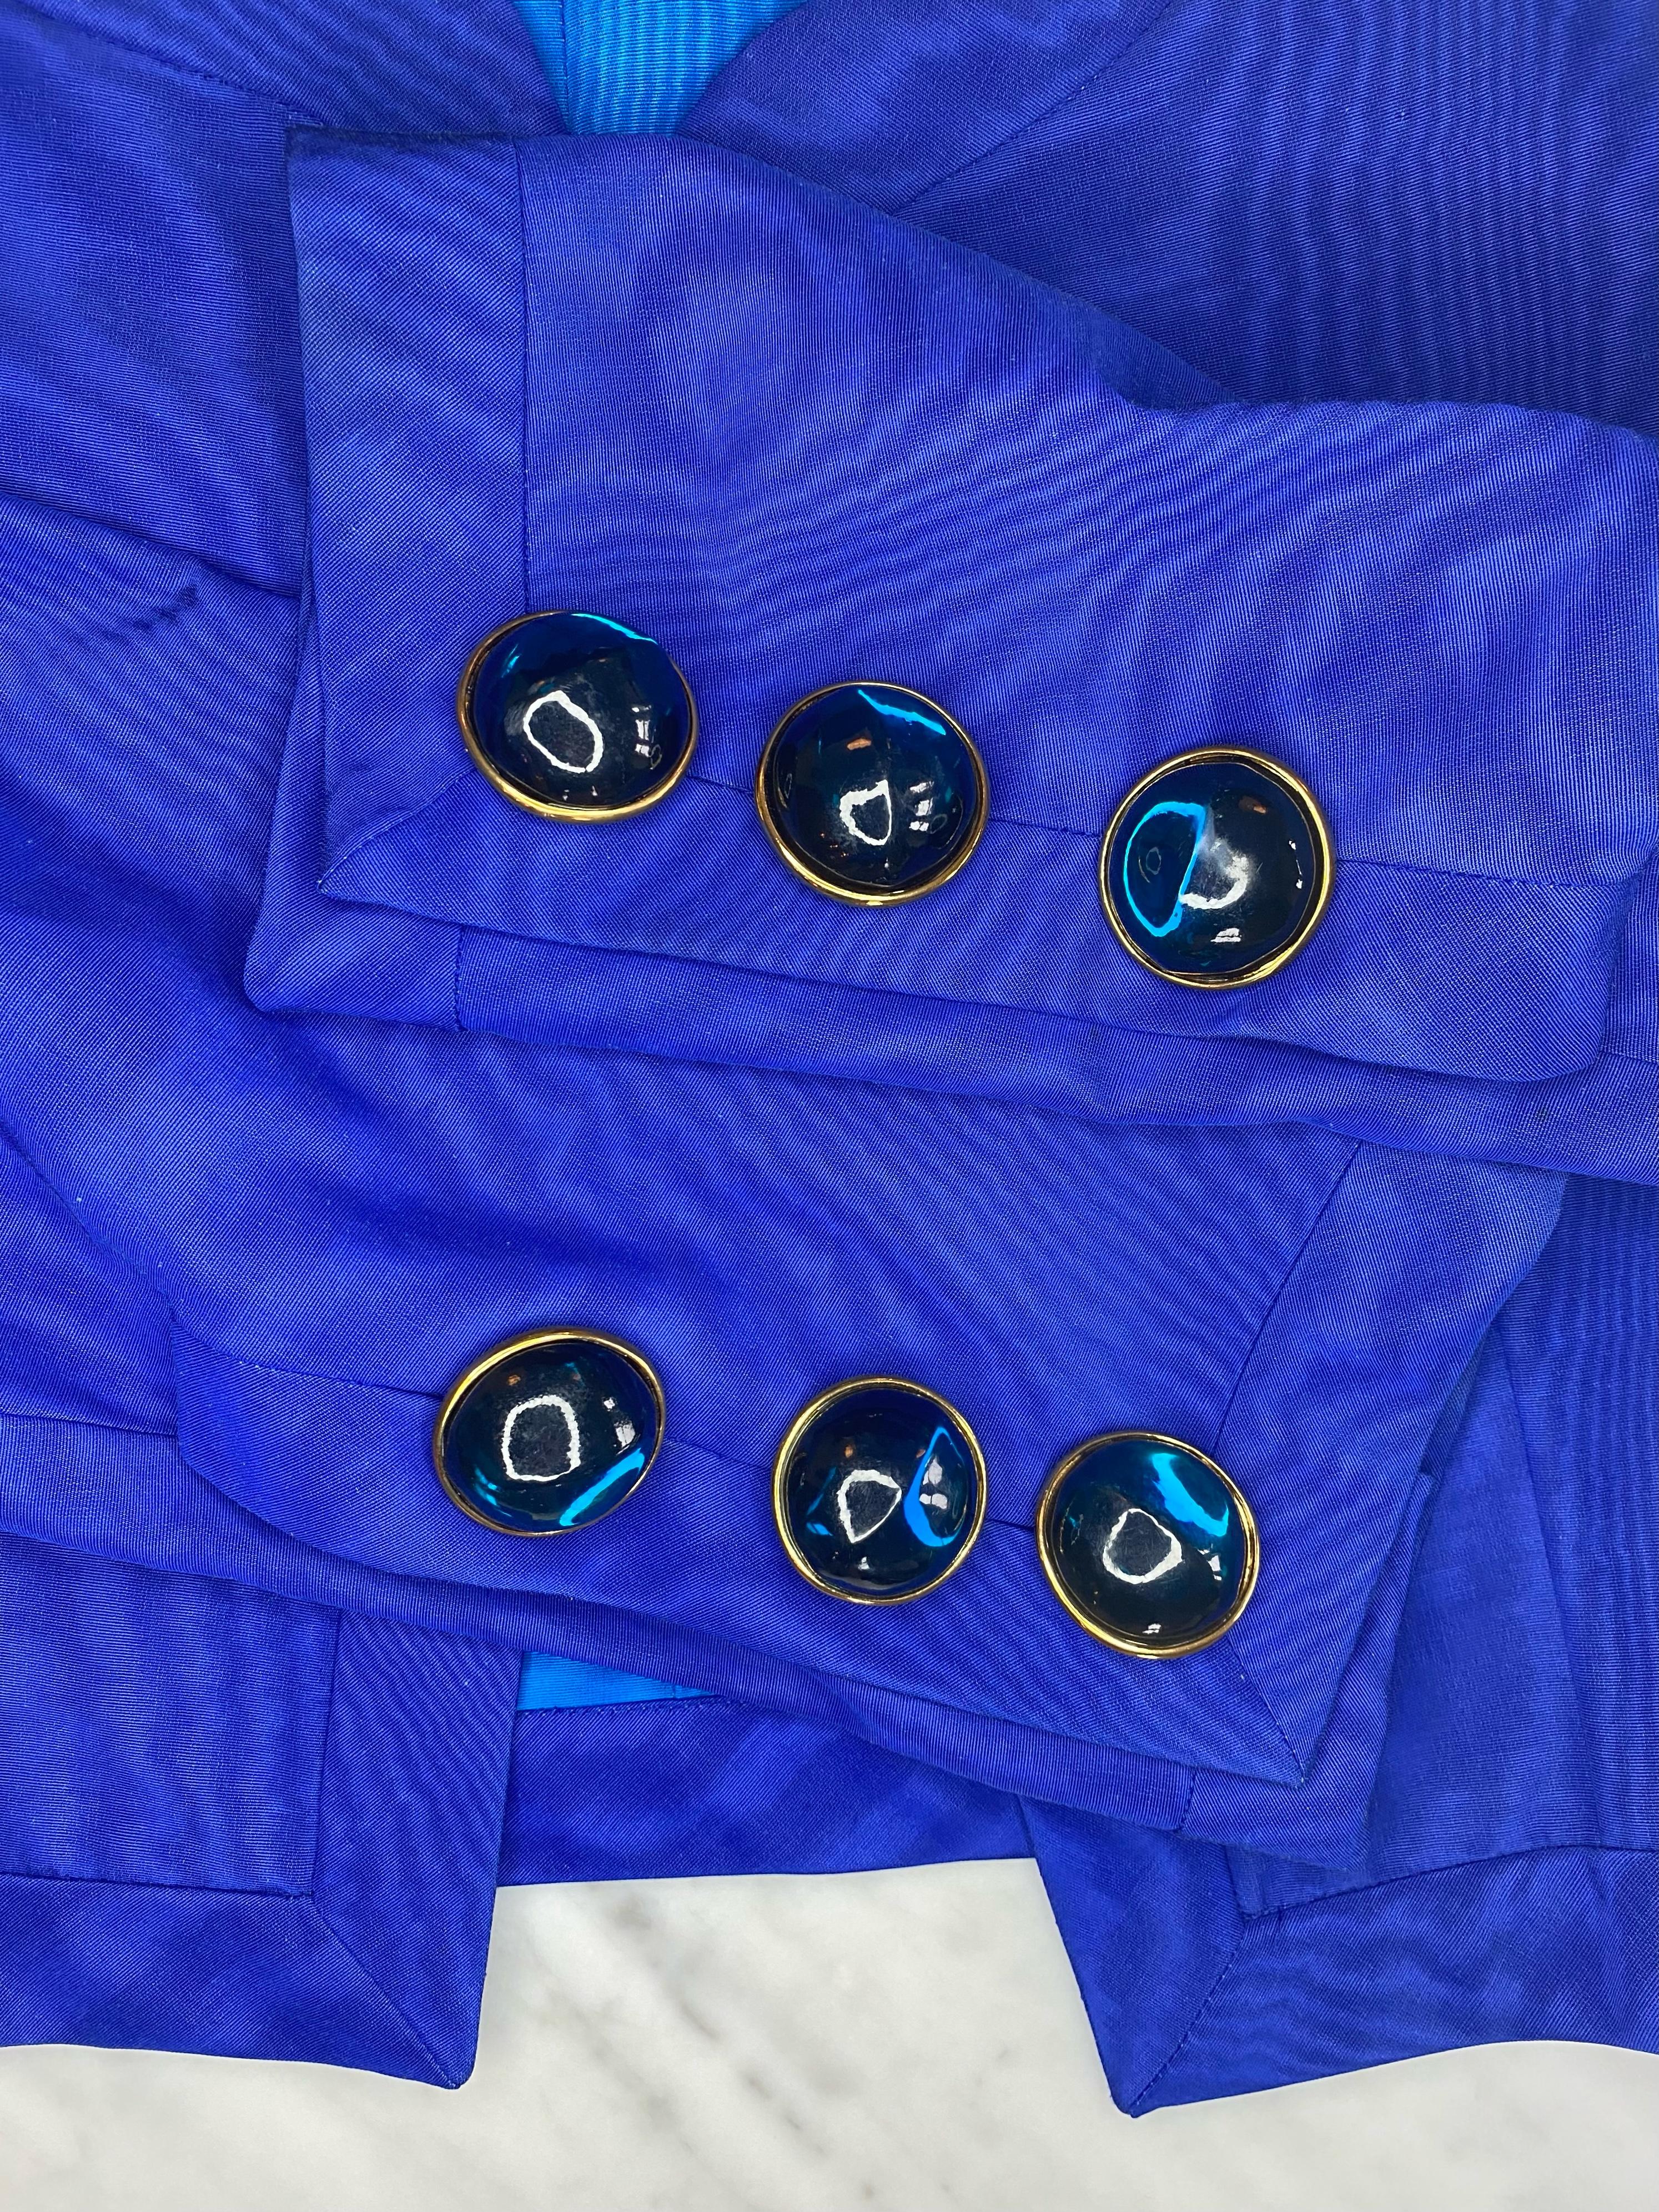 S/S 1990 Yves Saint Laurent Rive Gauche Blue Glass Button Crop Jacket Runway 1